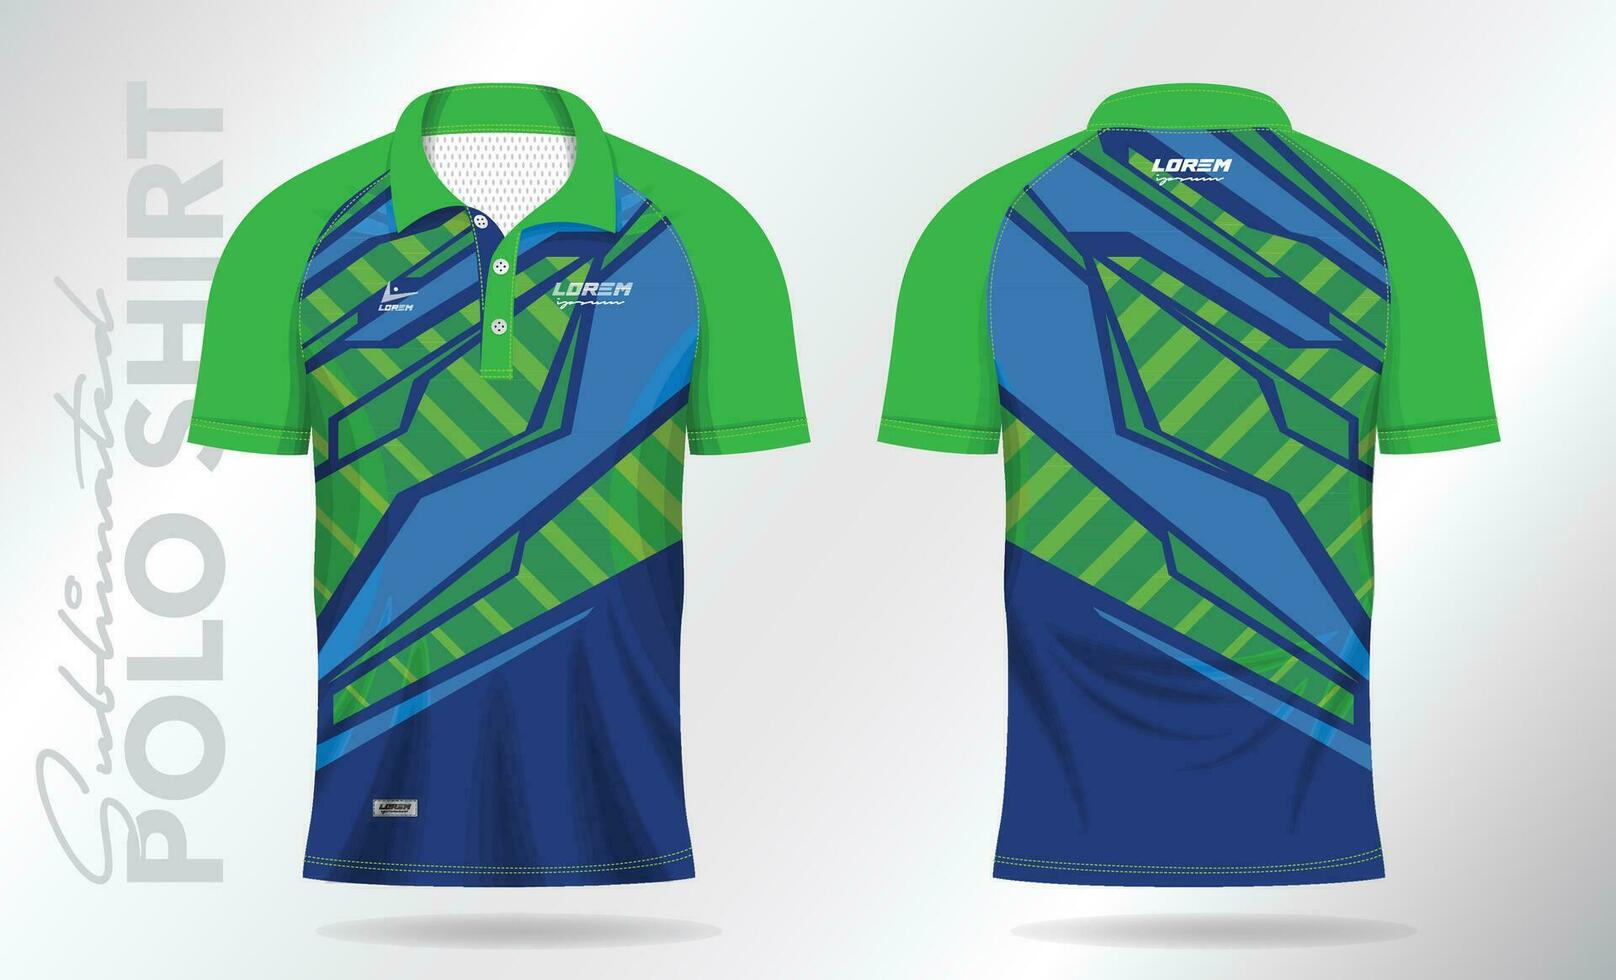 blue green sublimation Polo Shirt mockup template design for badminton jersey, tennis, soccer, football or sport uniform vector